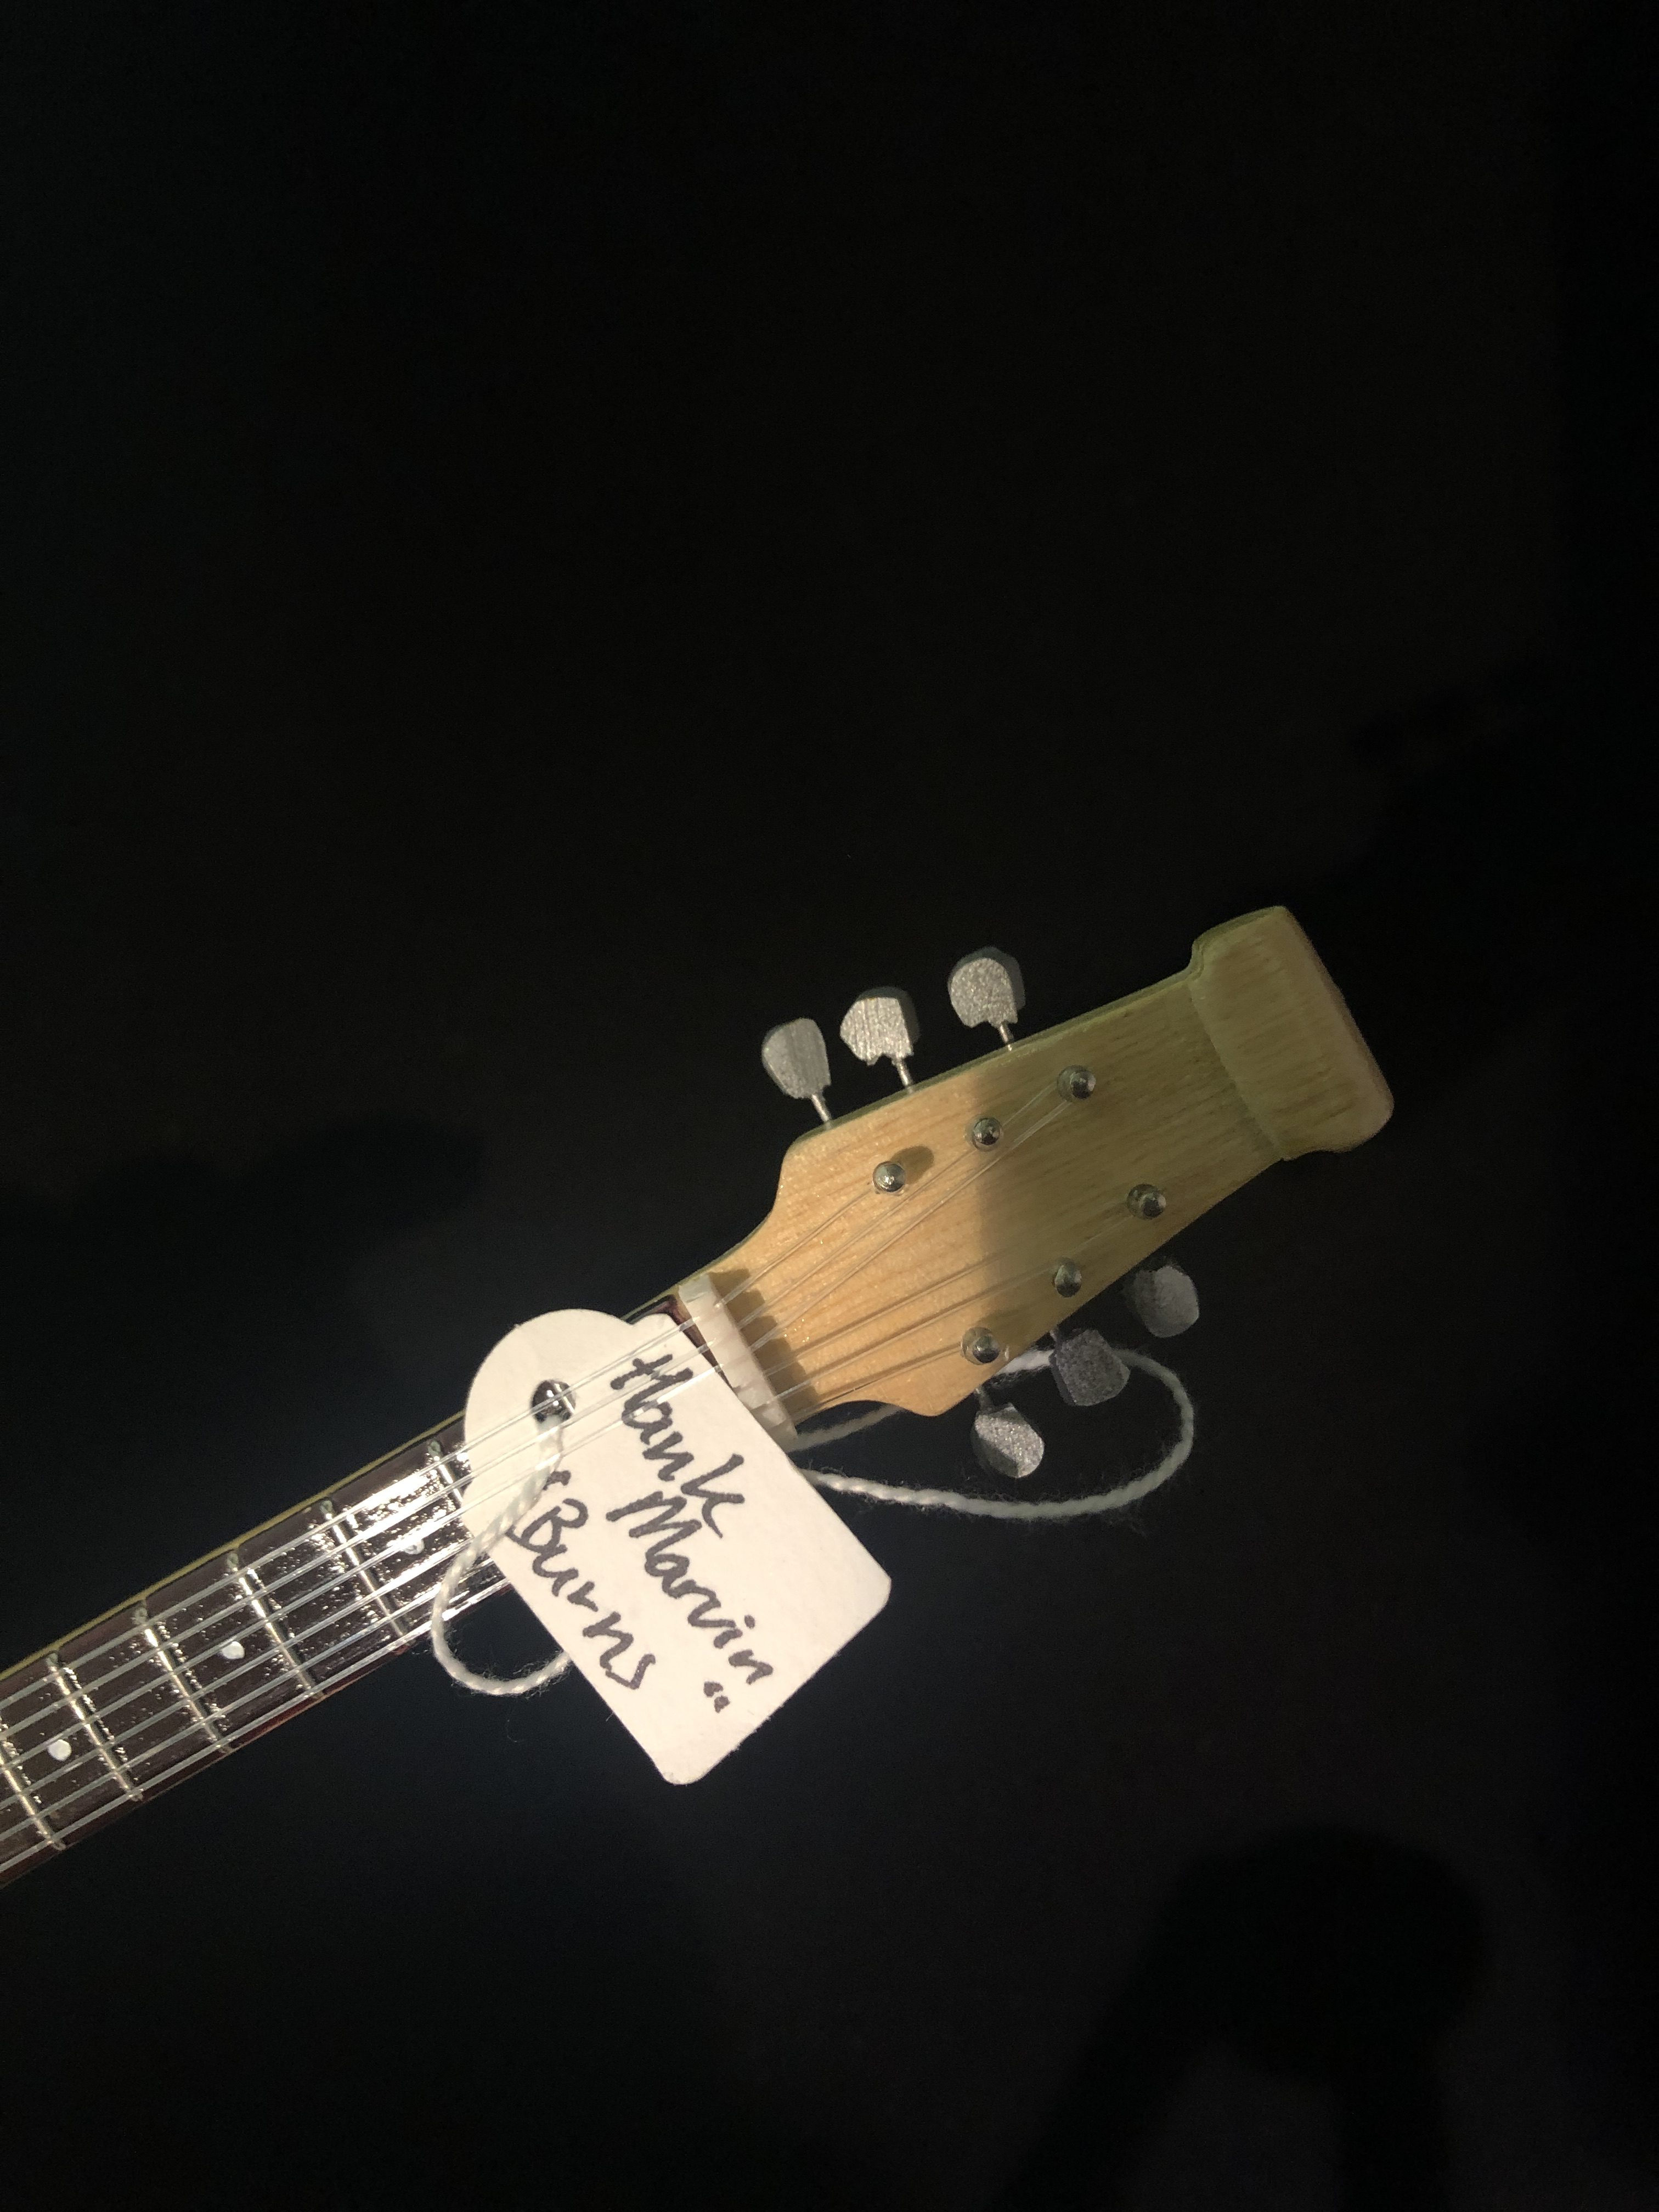 Miniature Guitar Burns Hank Marvin